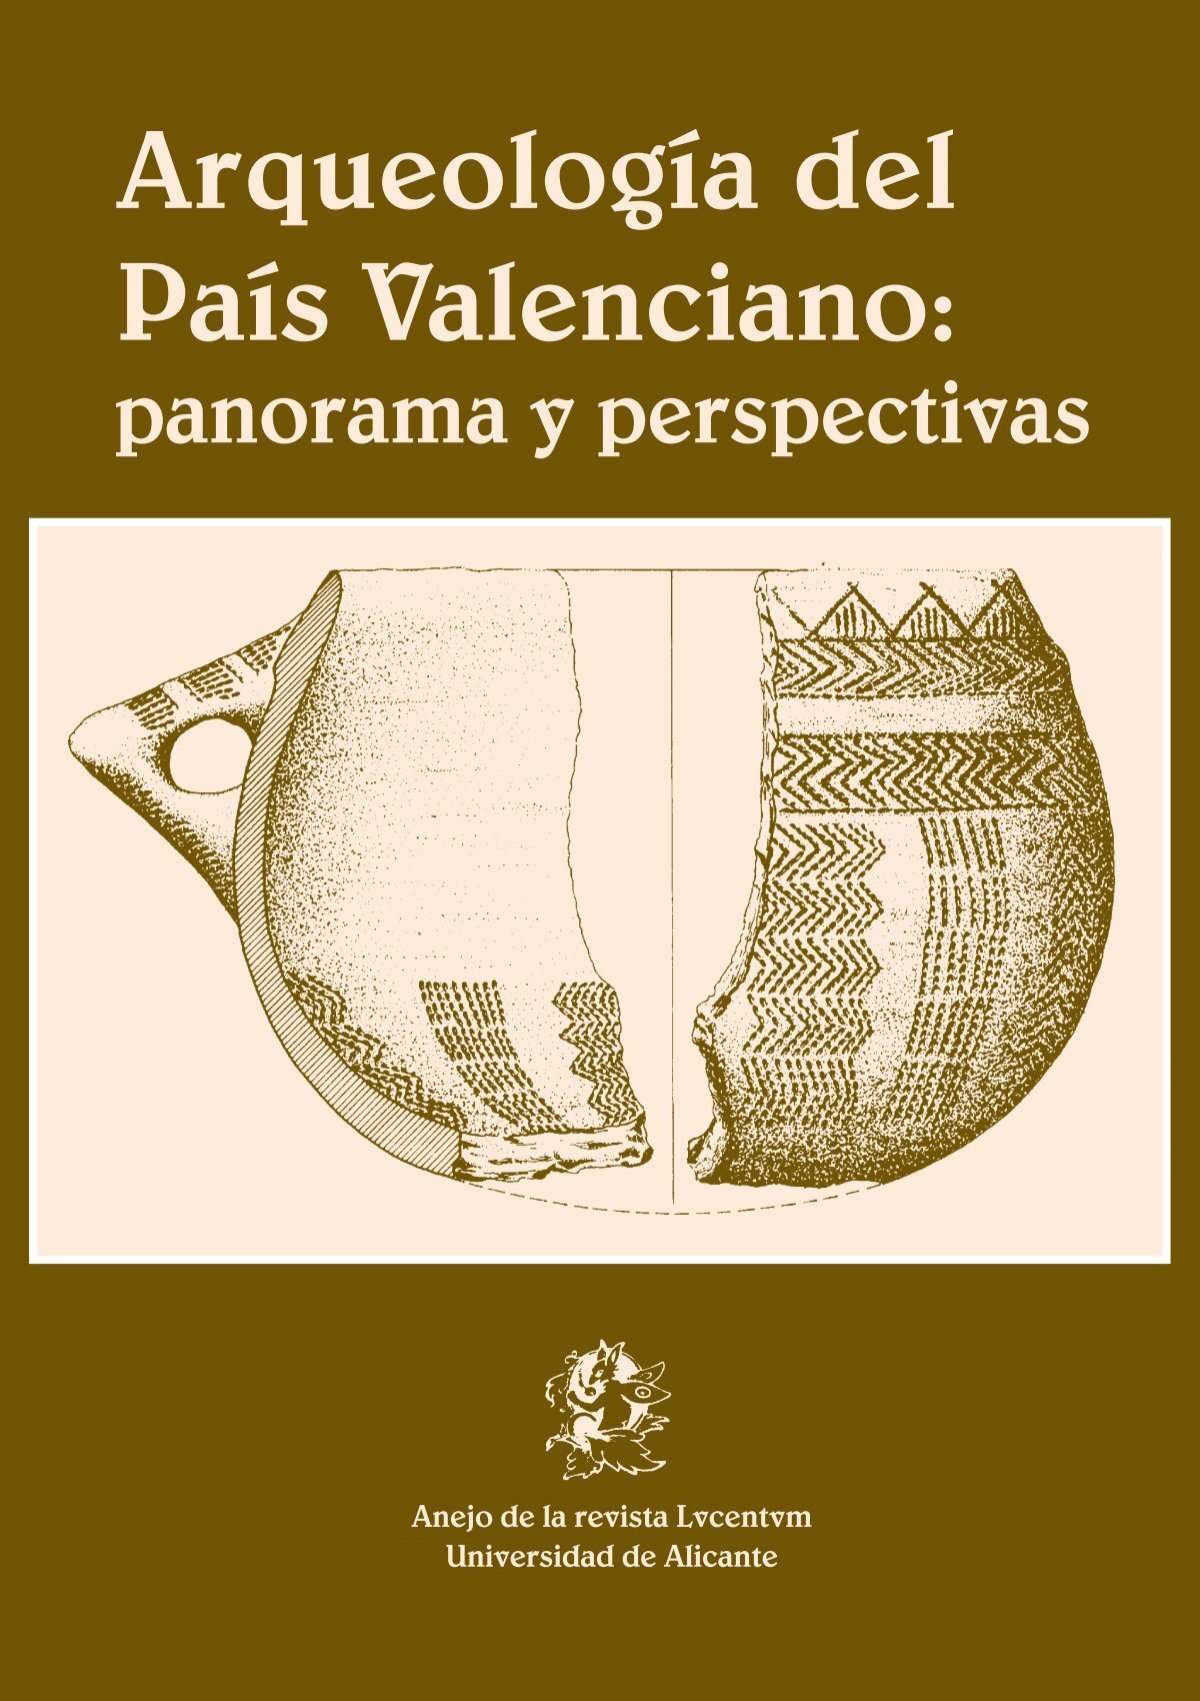 Arqueologia del Valenciano: panorama